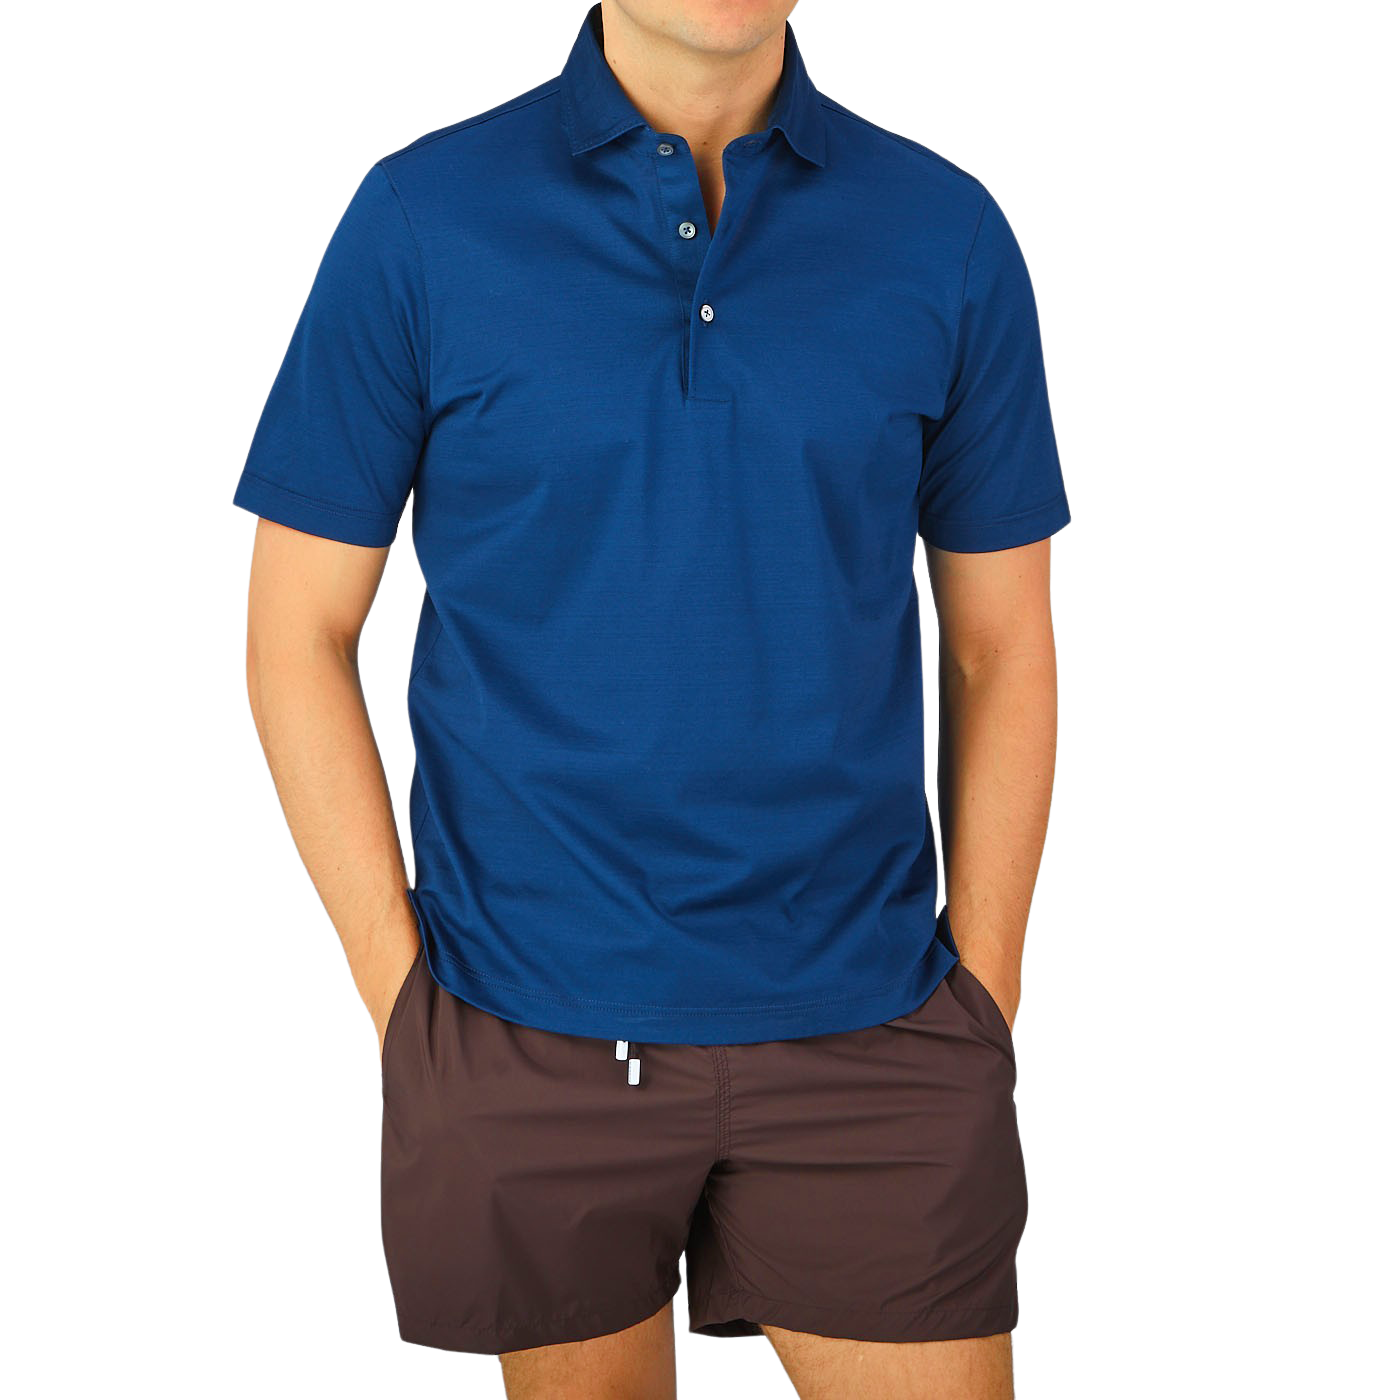 A man wearing a Navy Blue Cotton Filo Scozia Polo Shirt by Gran Sasso.